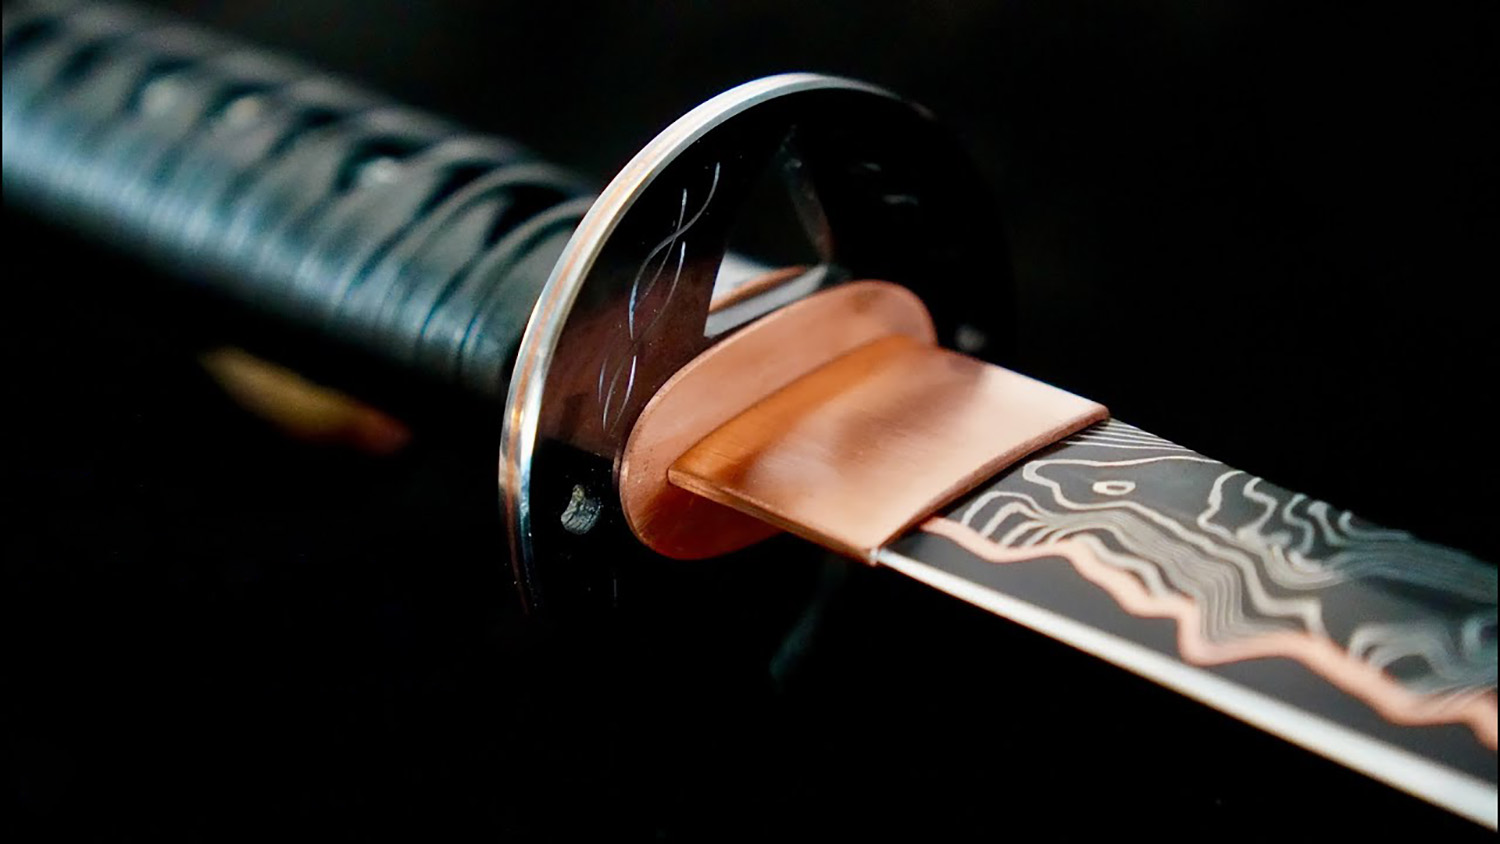 Damascus Steel Sword. Shutterstock.